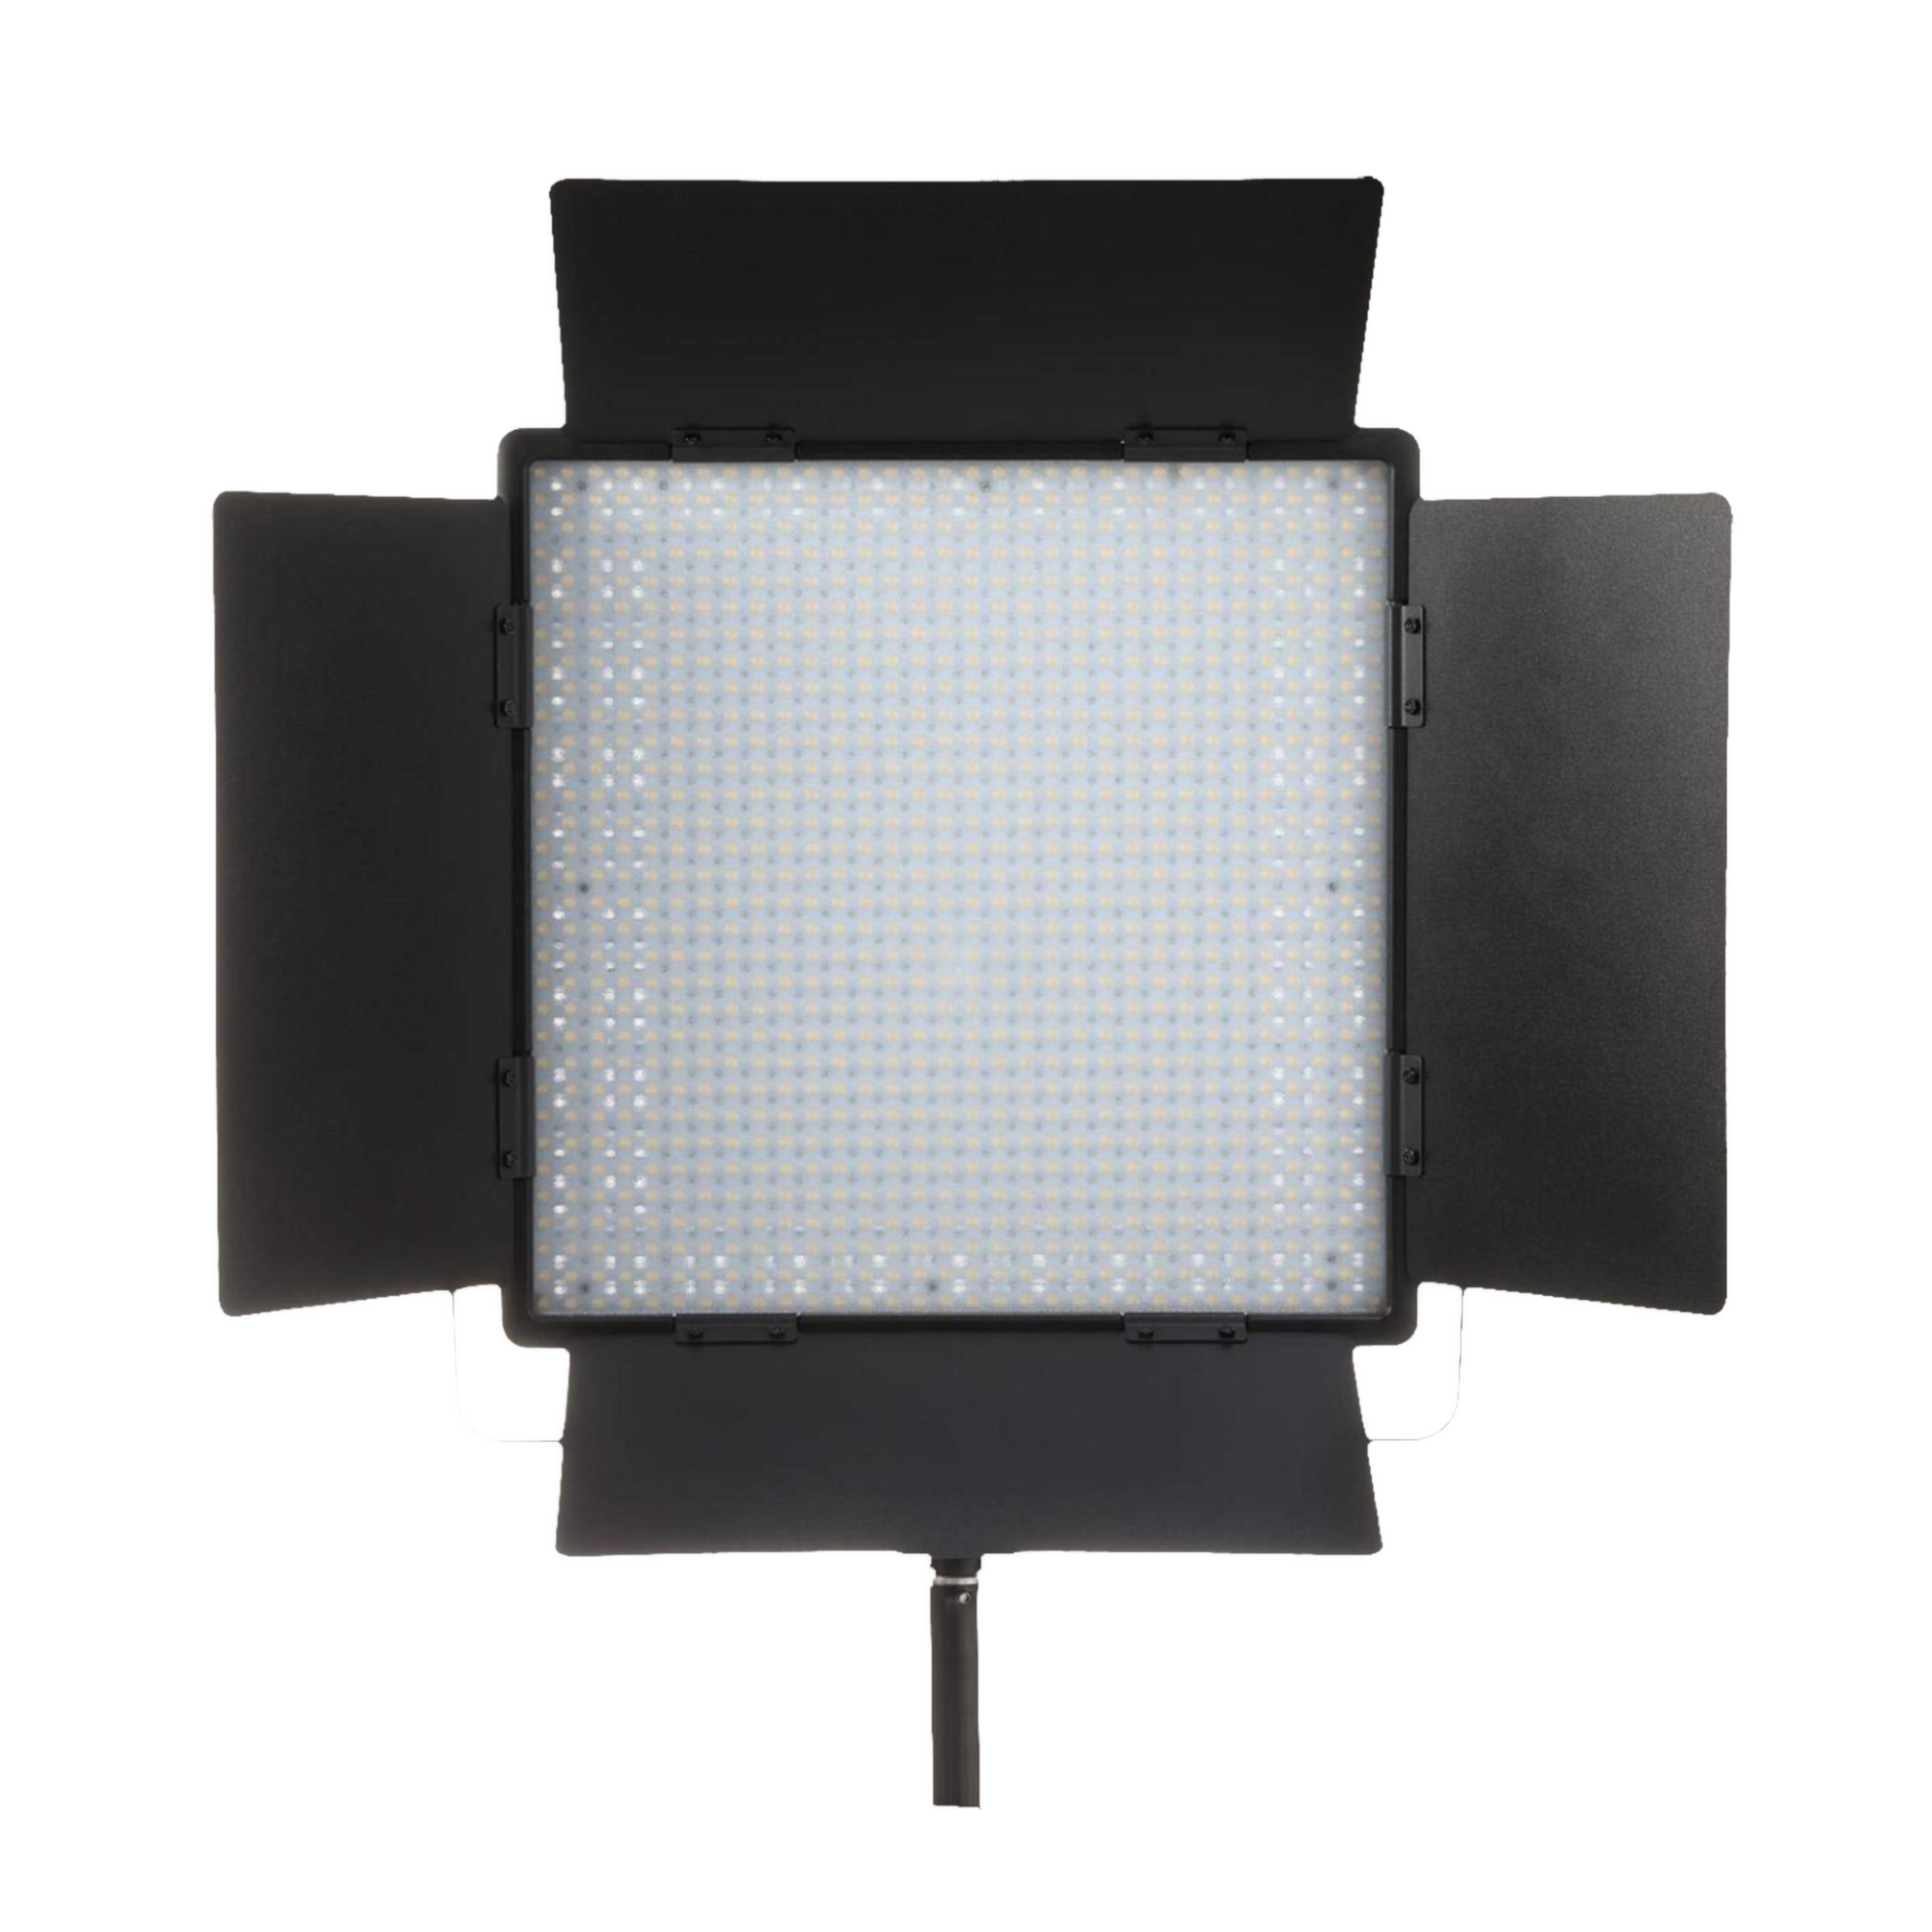 Godox 1000BiII LED Video Light for Still Photography & Videography (Bi-Color Version)